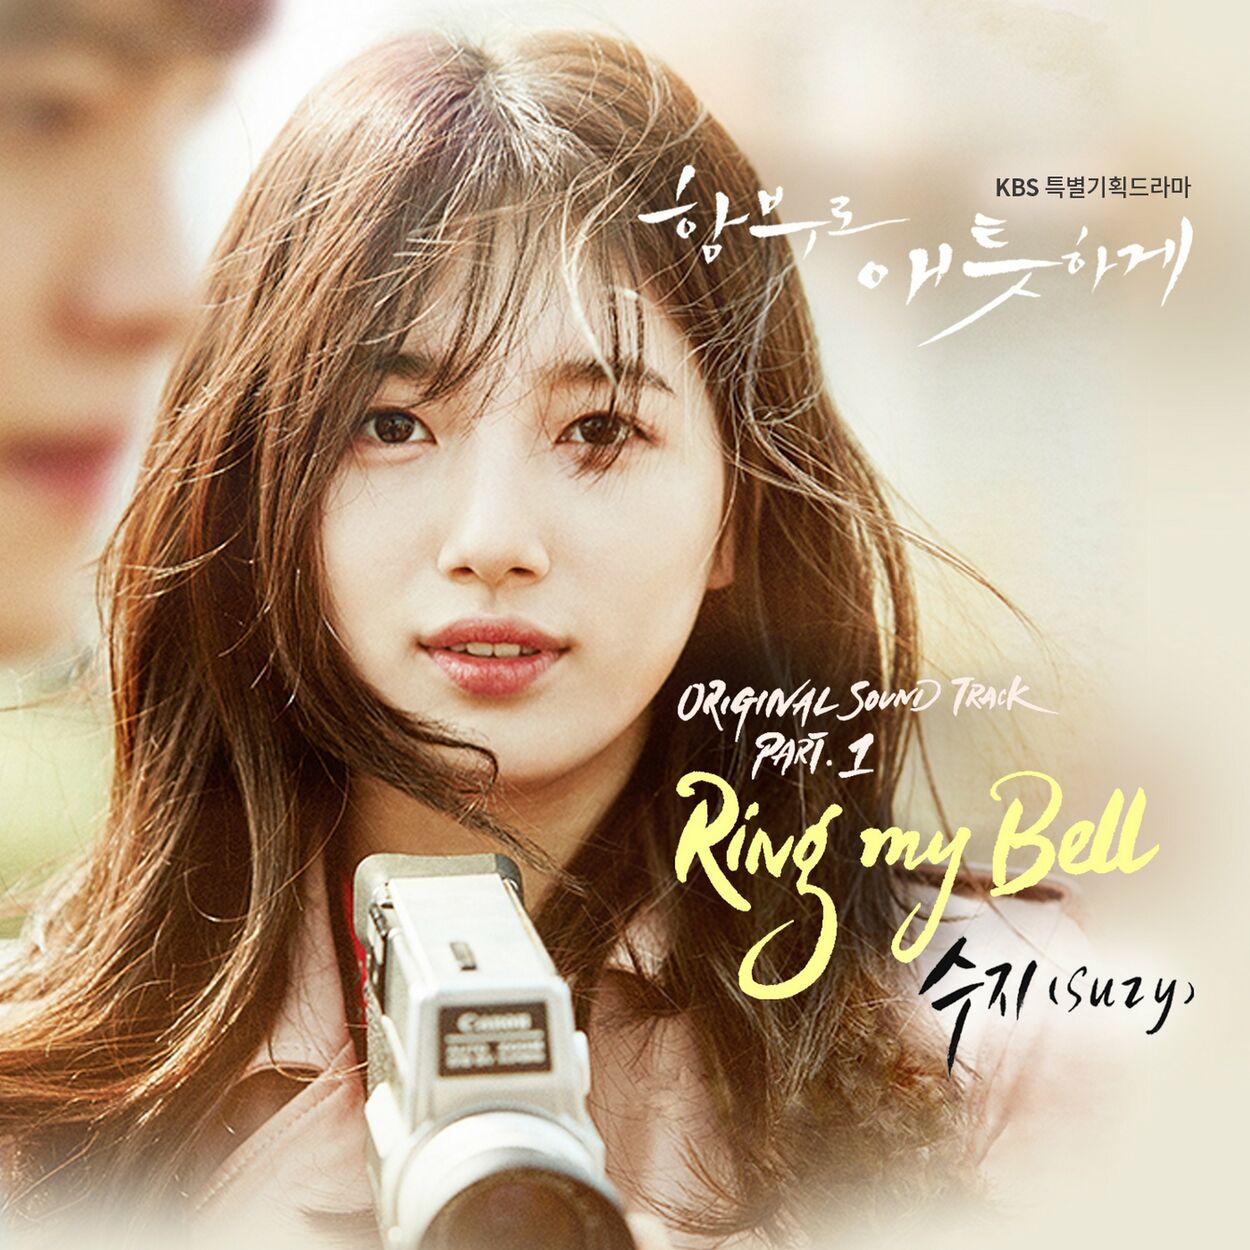 Suzy – Uncontrollably Fond OST Part.1